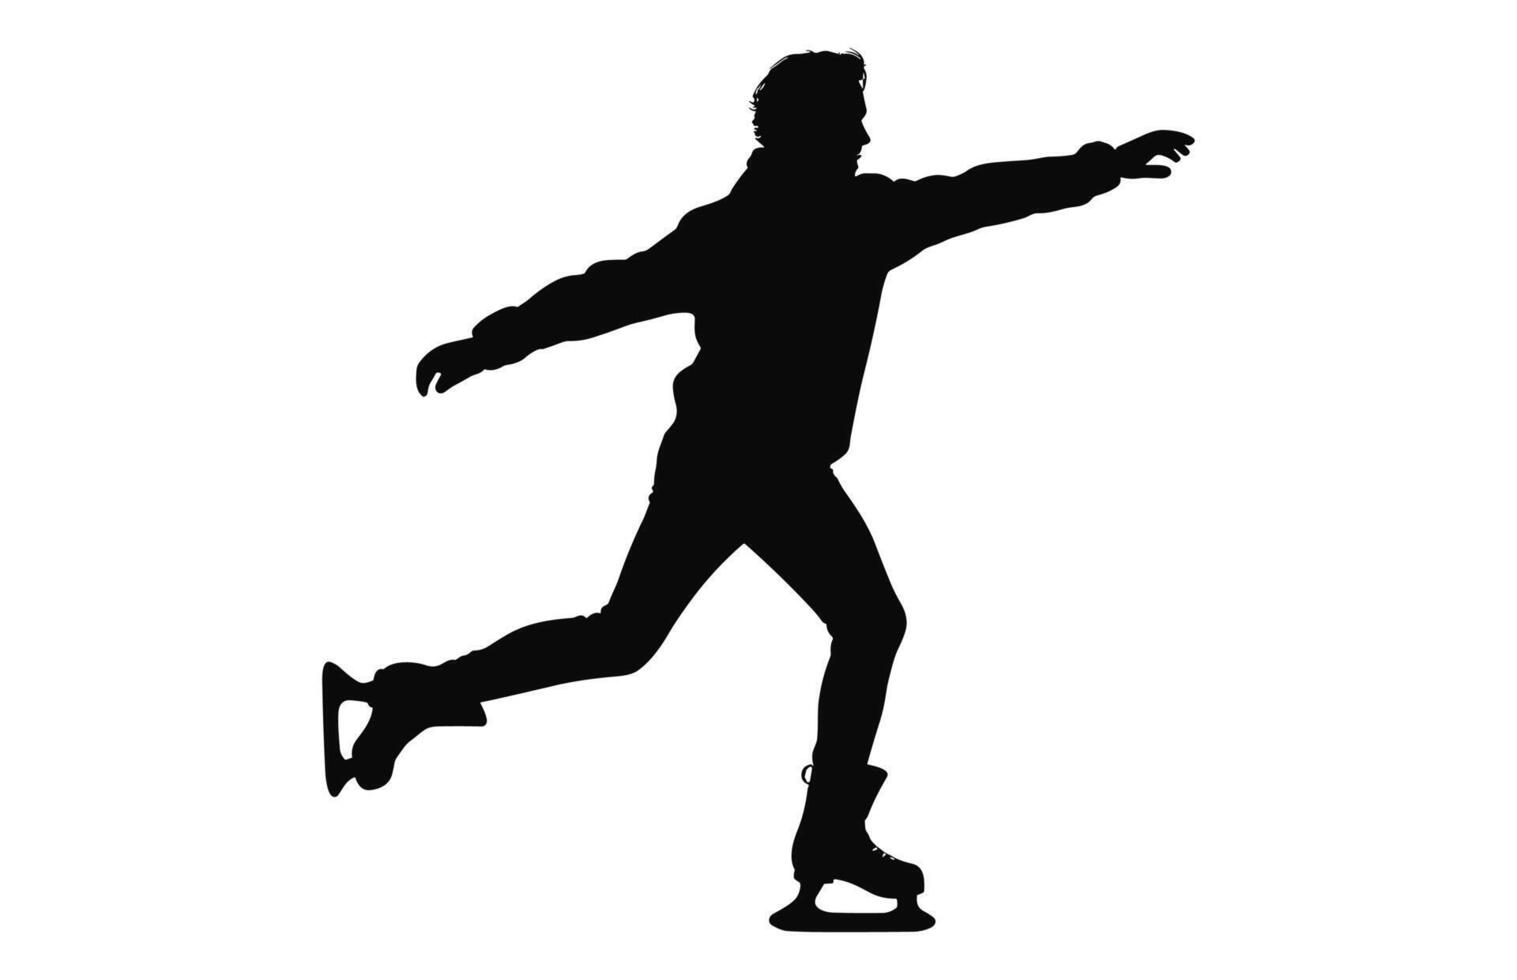 Man Figure Ice Skating Silhouette Vector Bundle, Male Figure Skater Silhouettes black Clipart Set